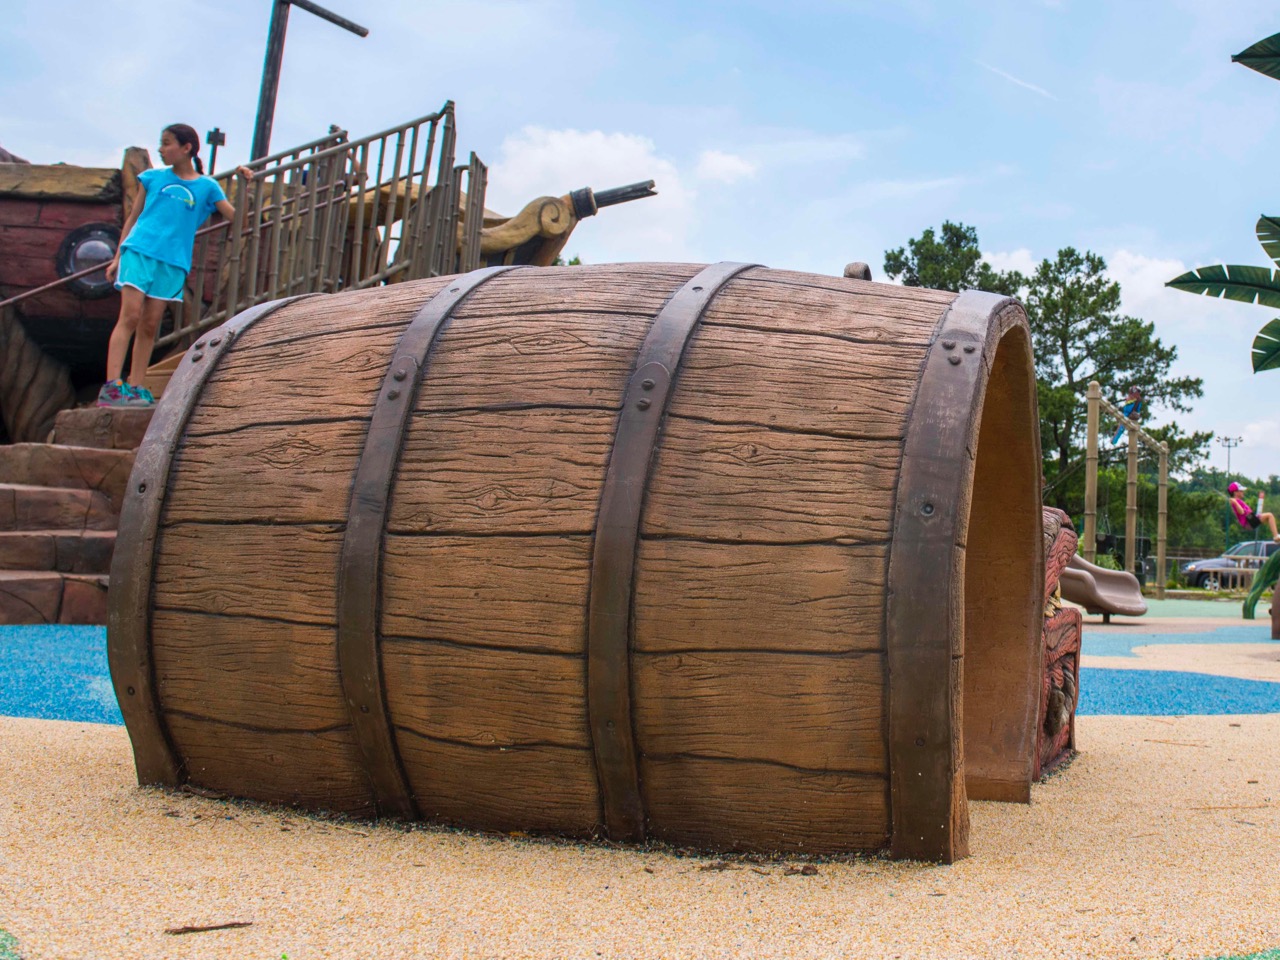 Barrel playground equipment